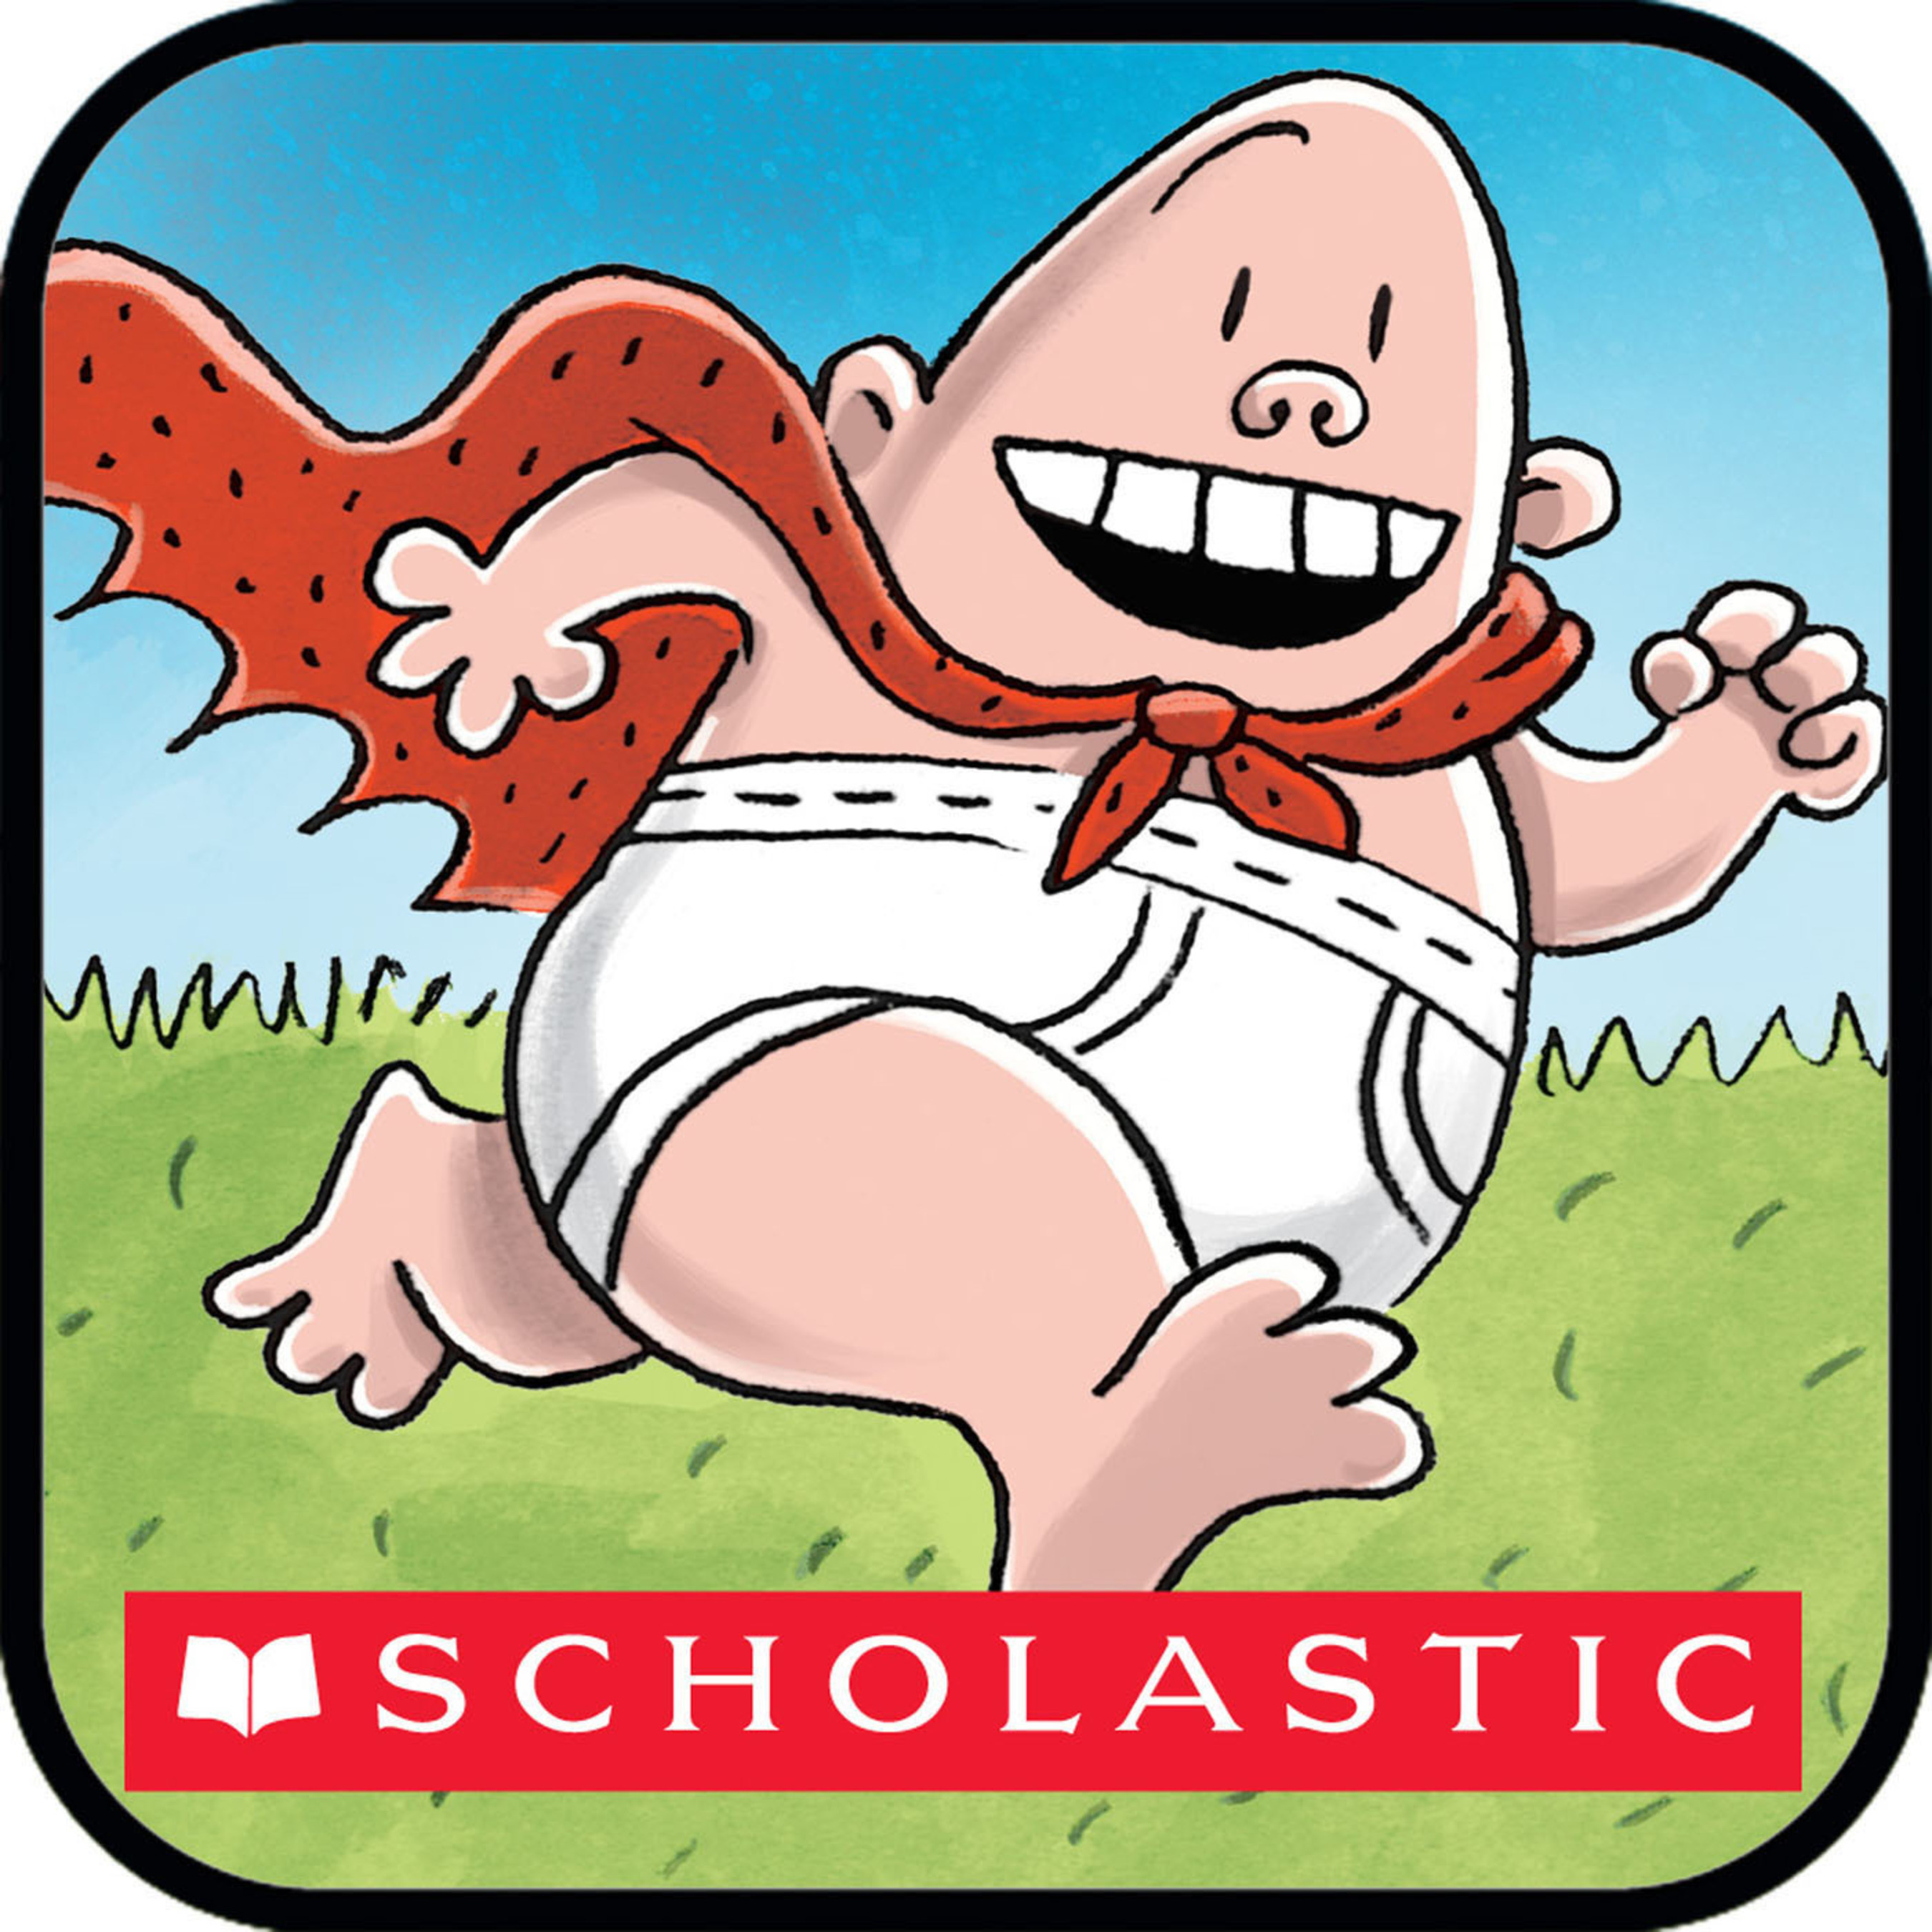 Scholastic Launches The Adventures of Captain Underpants™ App